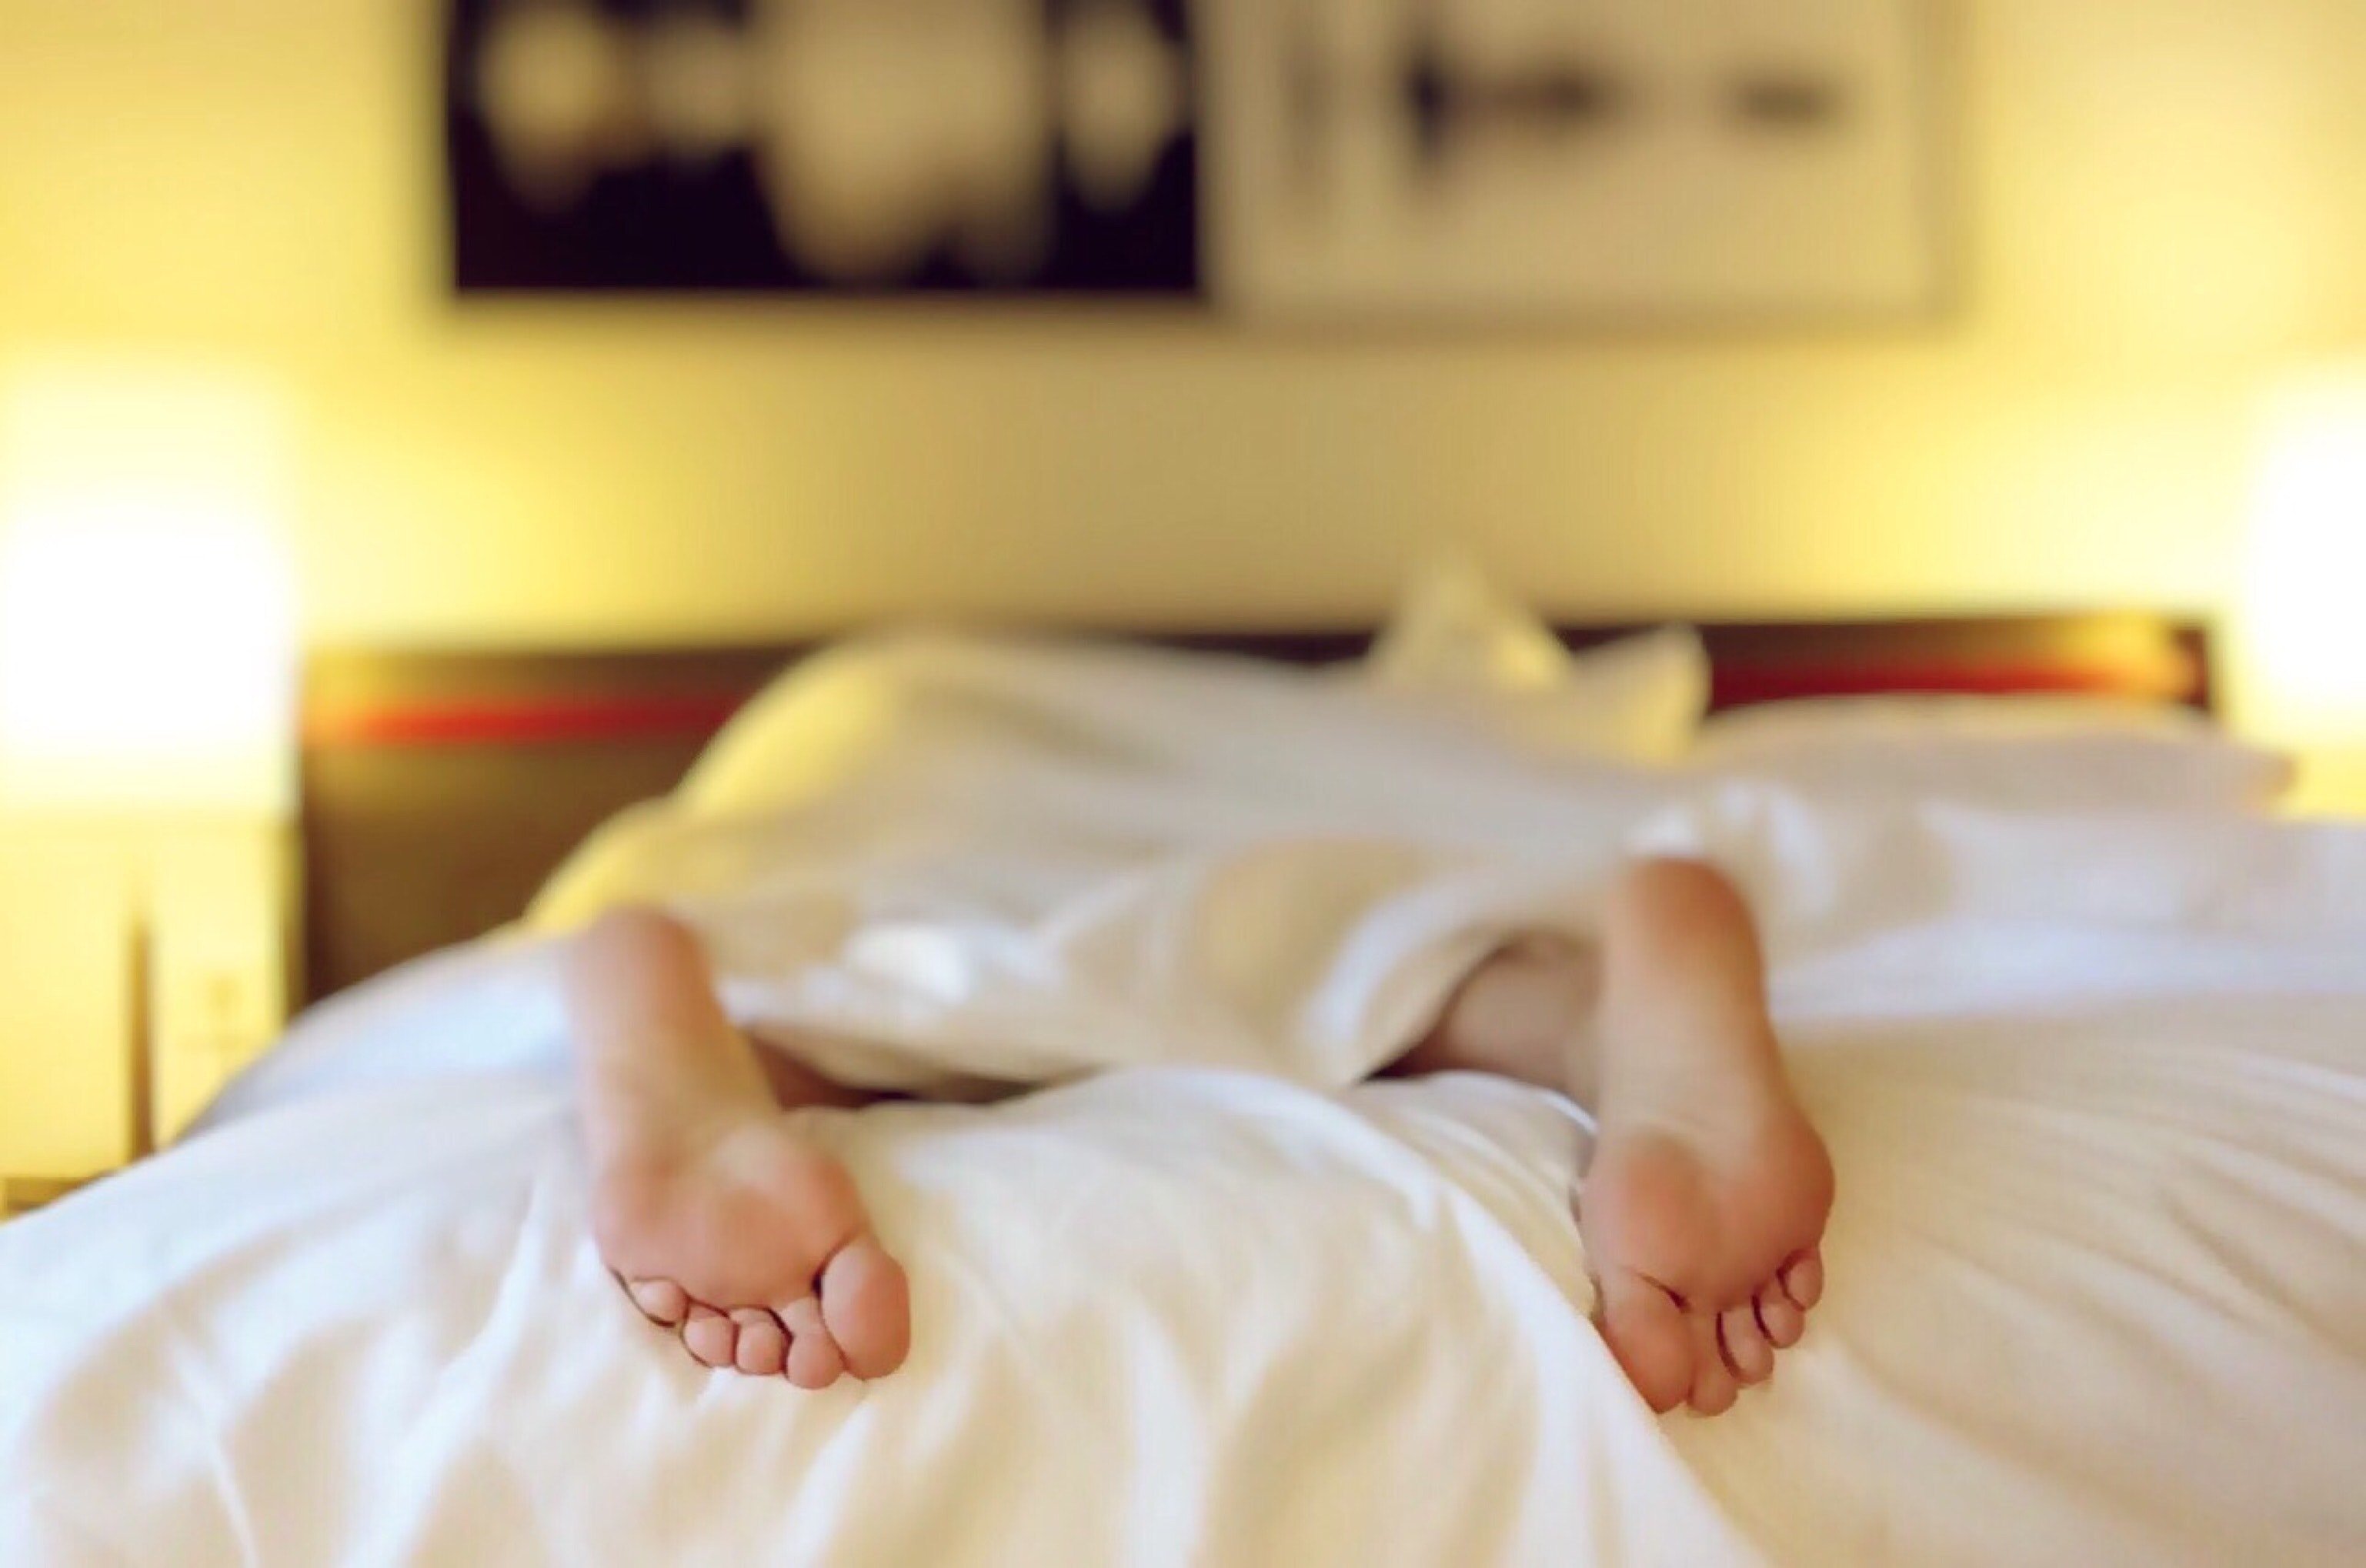 Pies de una persona dormida en una cama. | Foto: Pexels